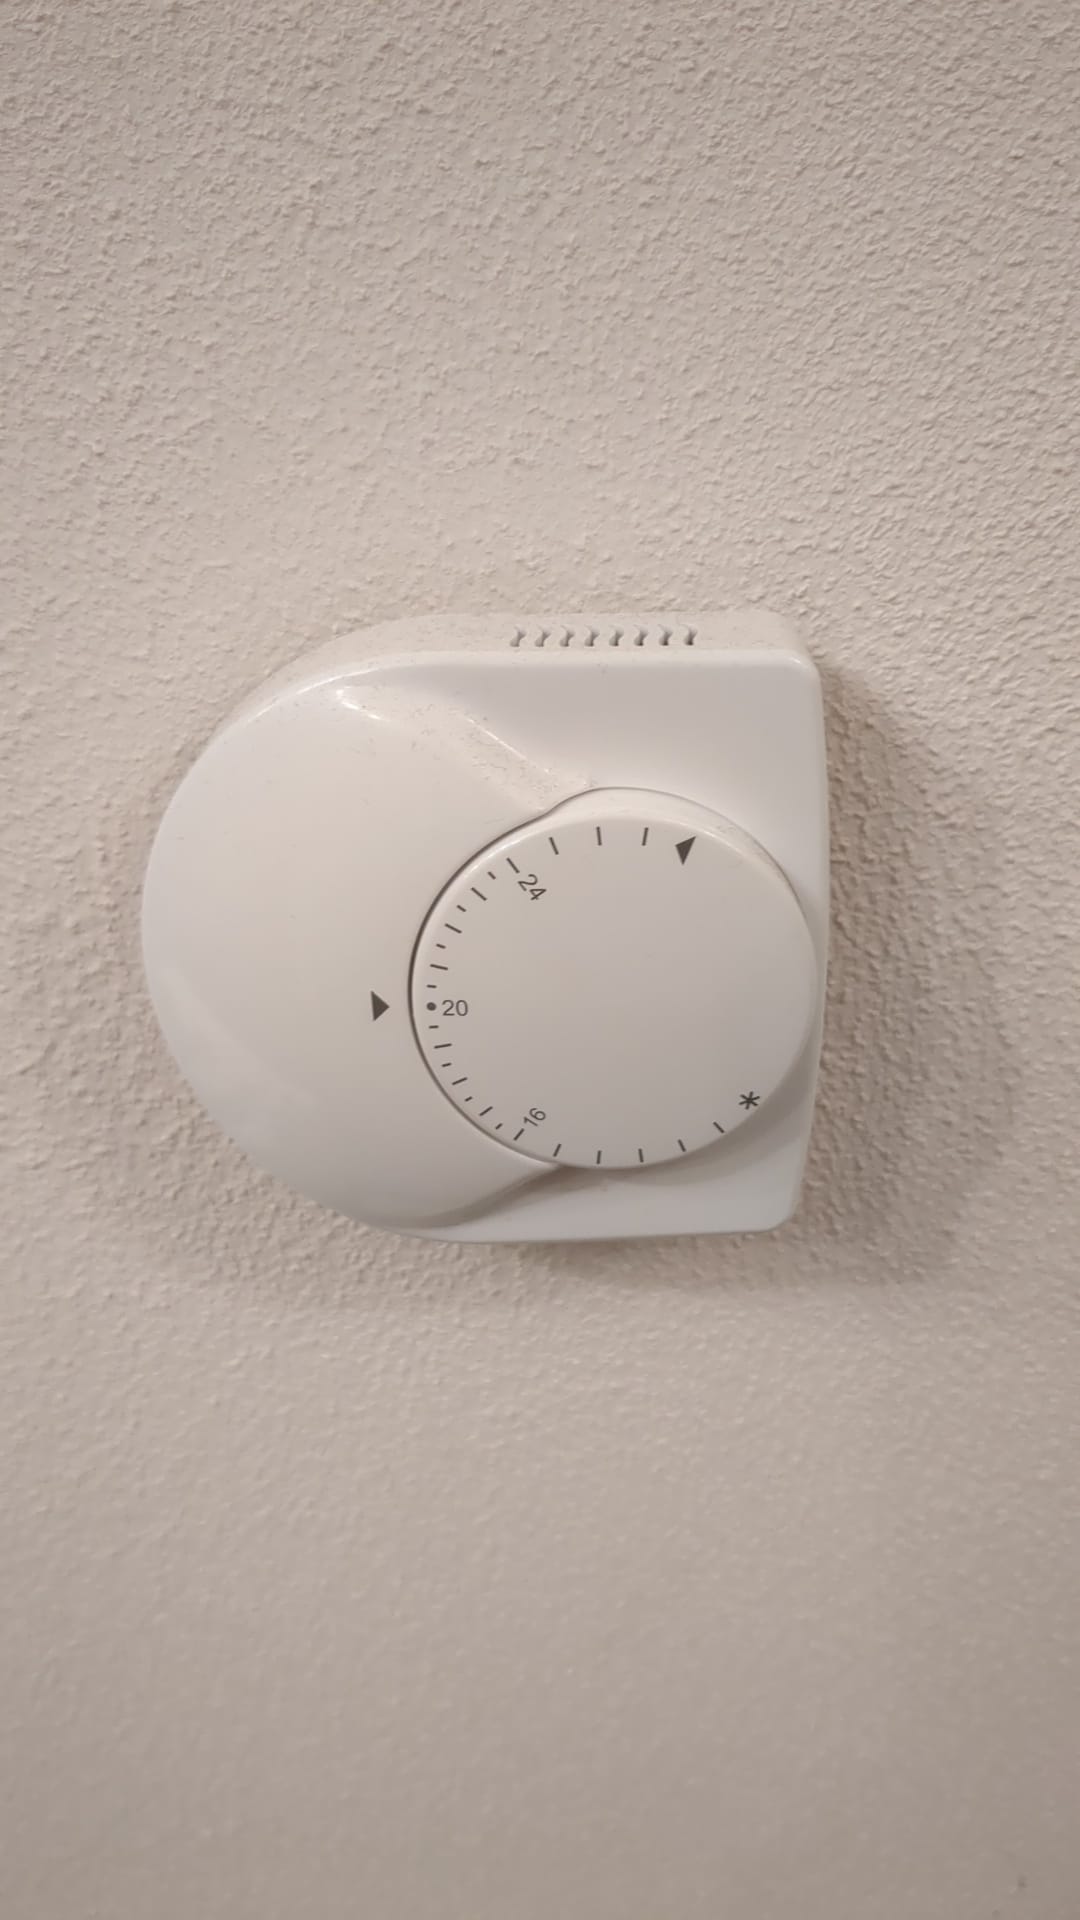 Bild Thermostat.jpg